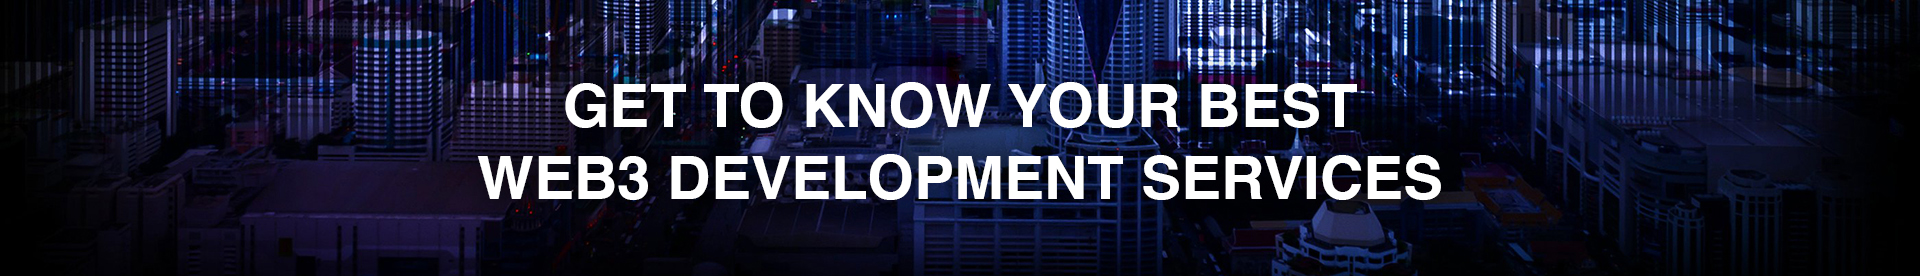 web3 development services